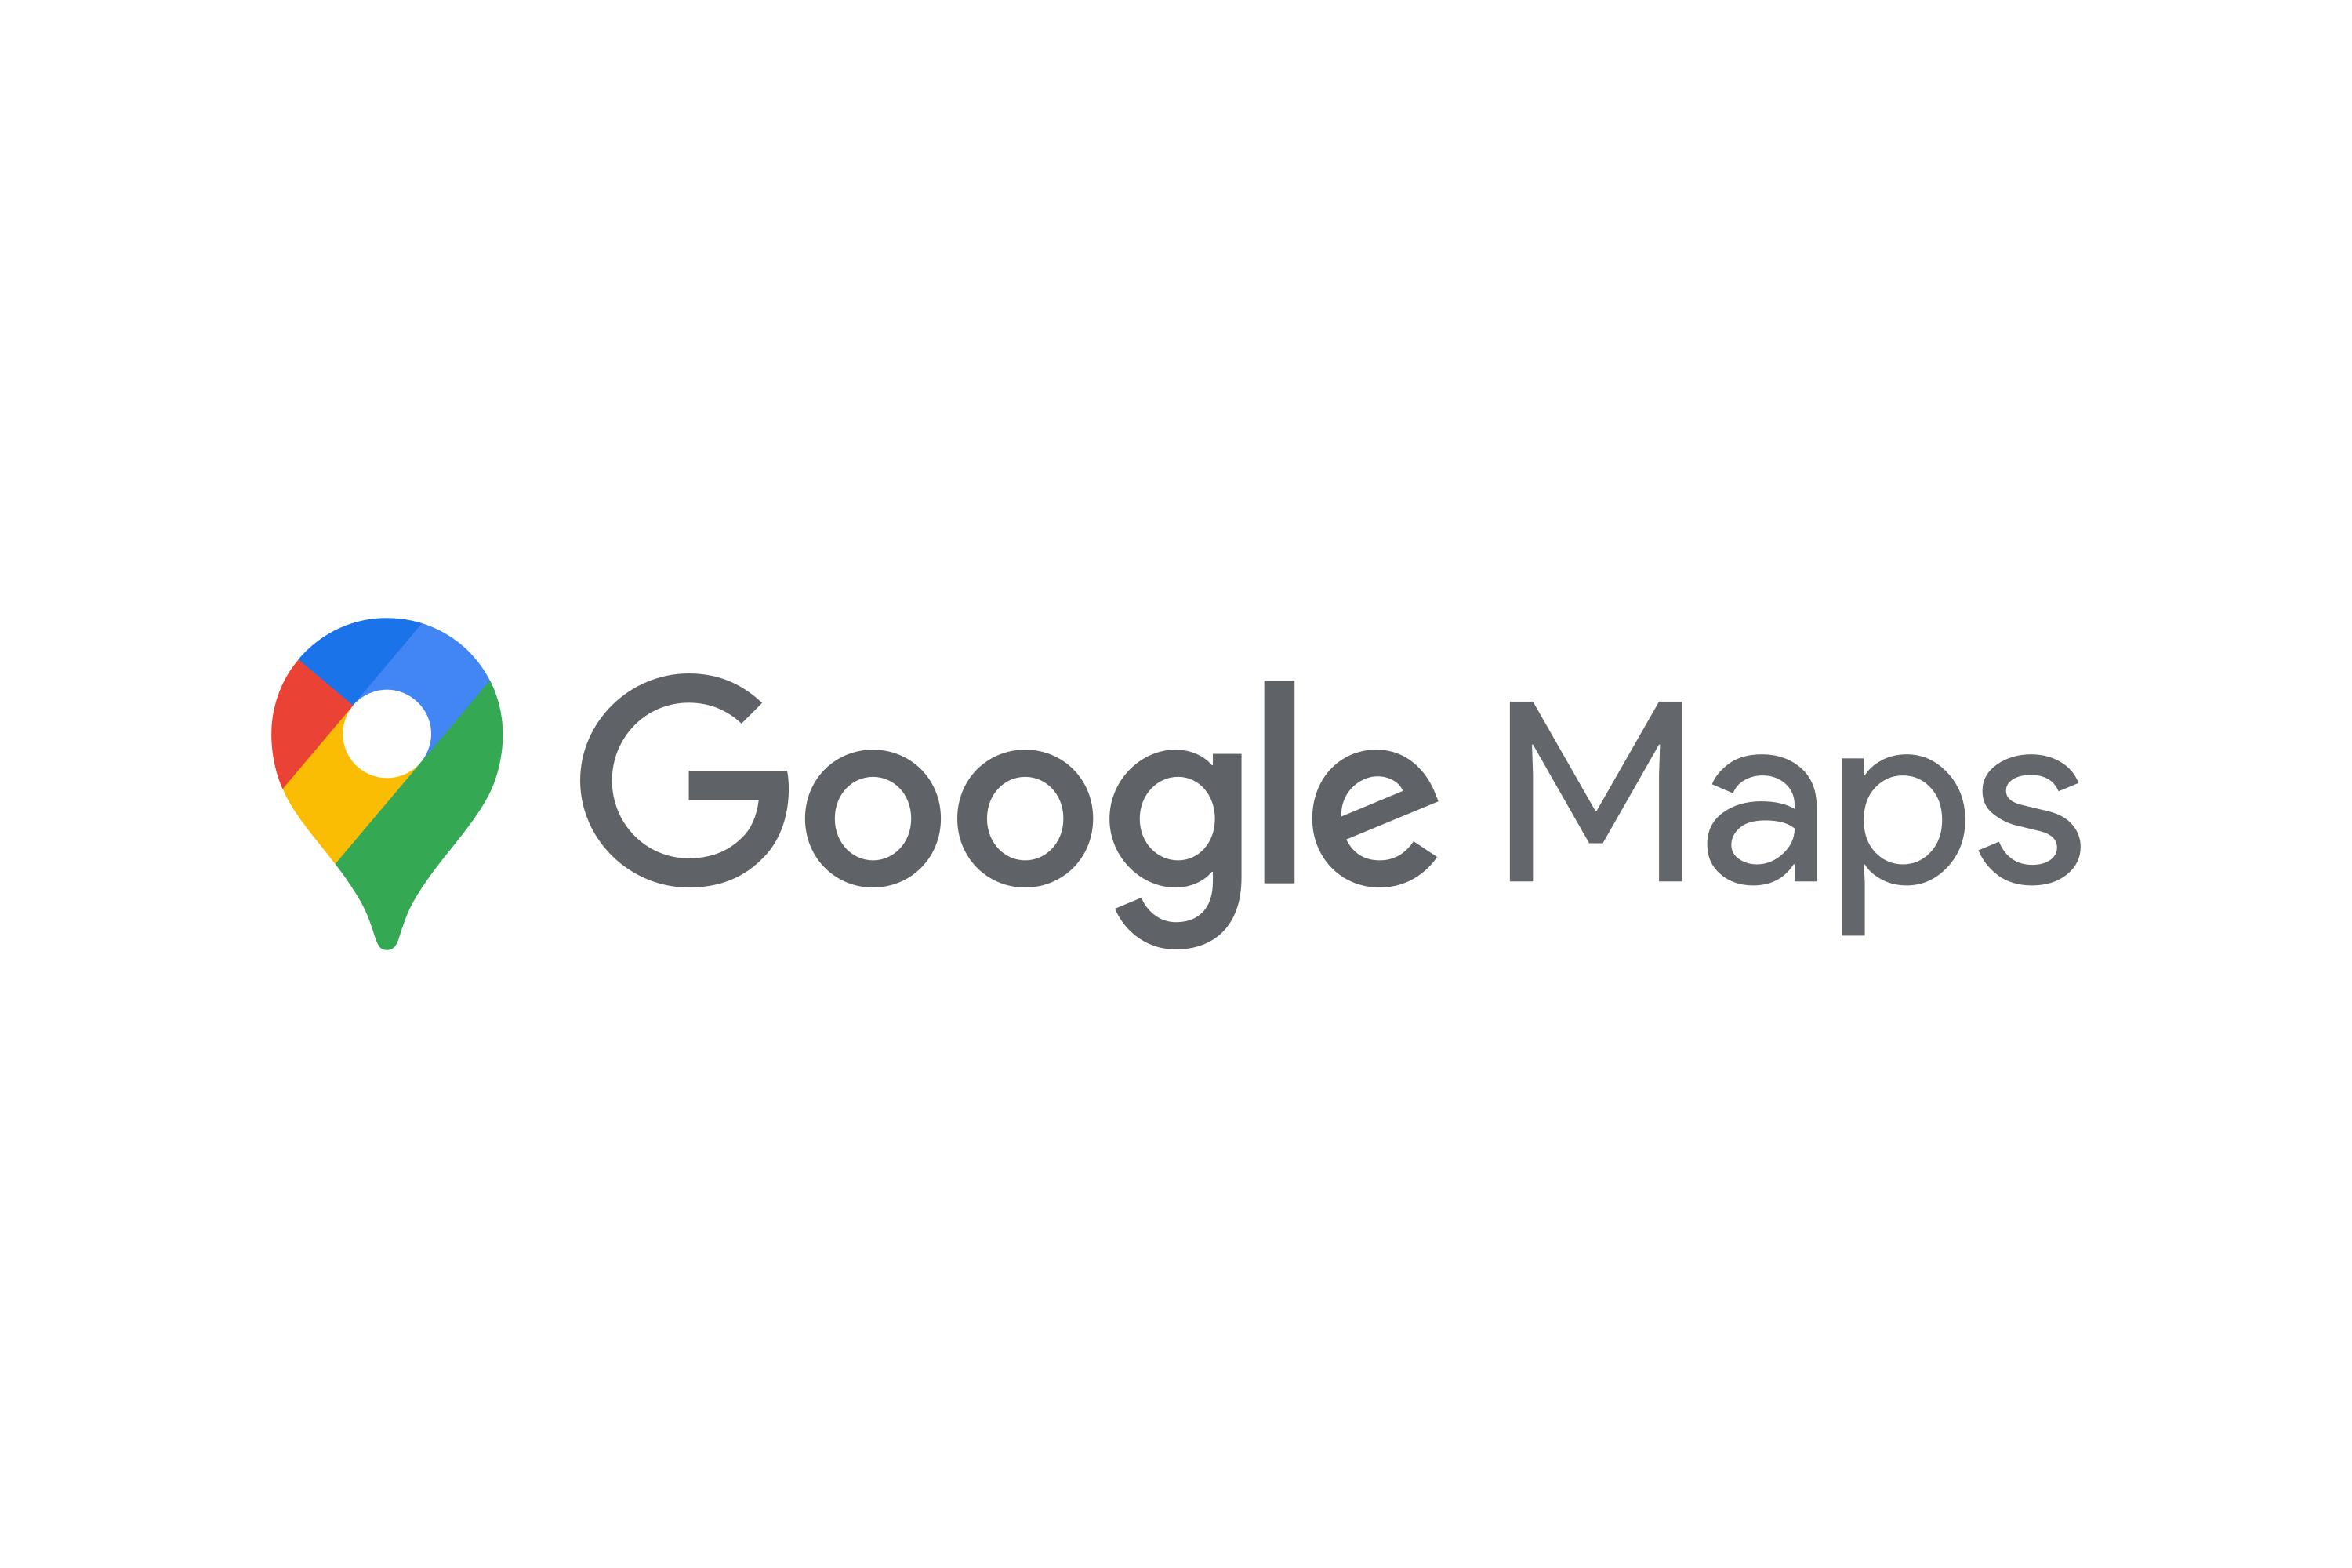 Google Maps PNG Transparent Images PNG All